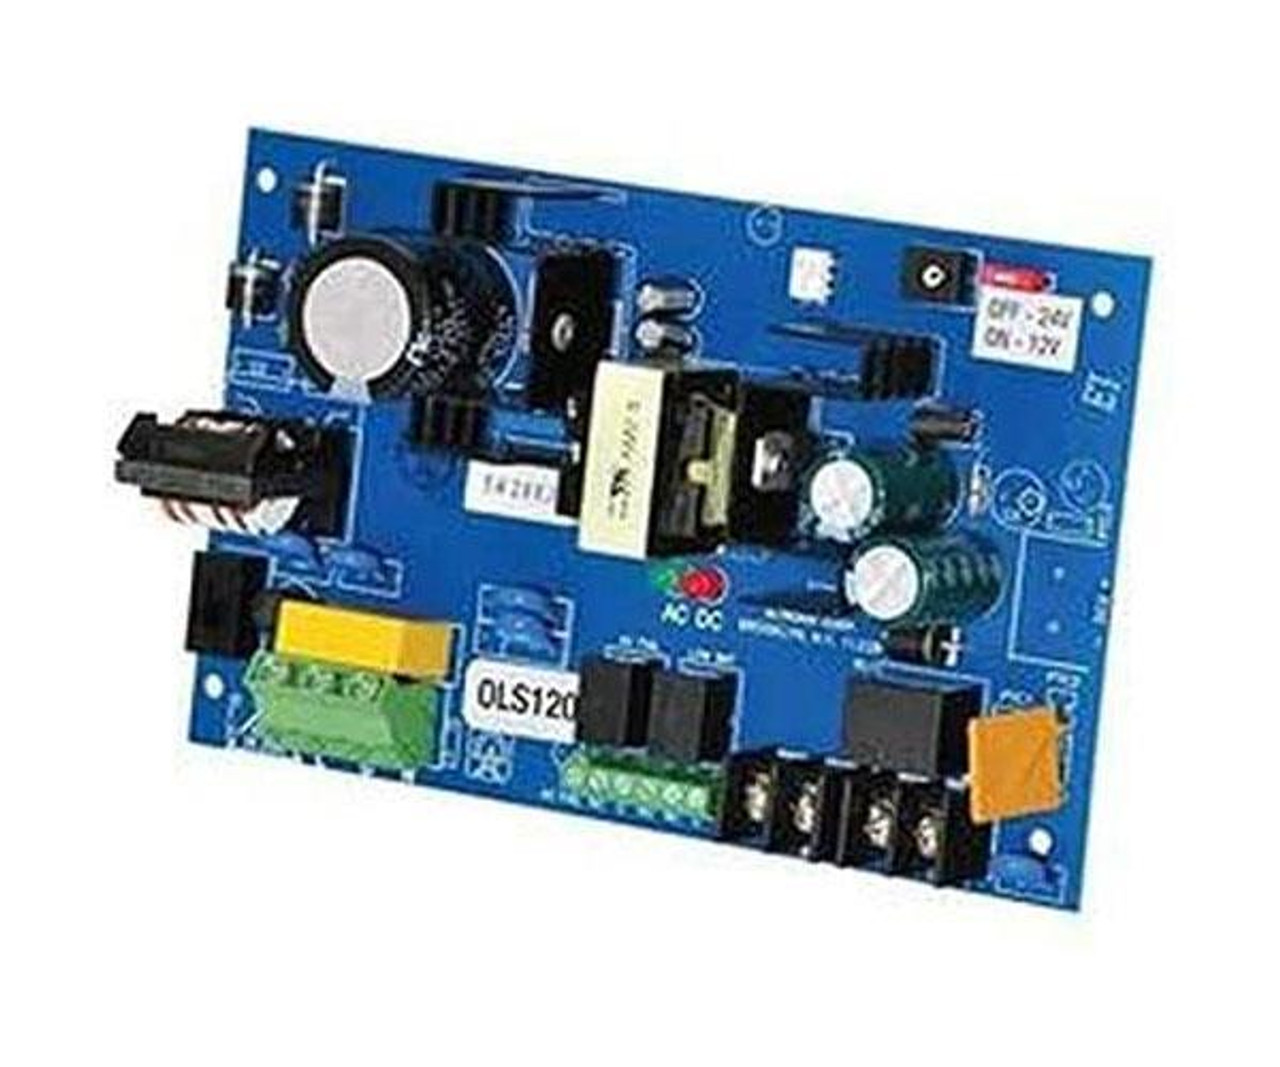 OLS127 Altronix 12/24VDC 4 Amp Power Supply Board